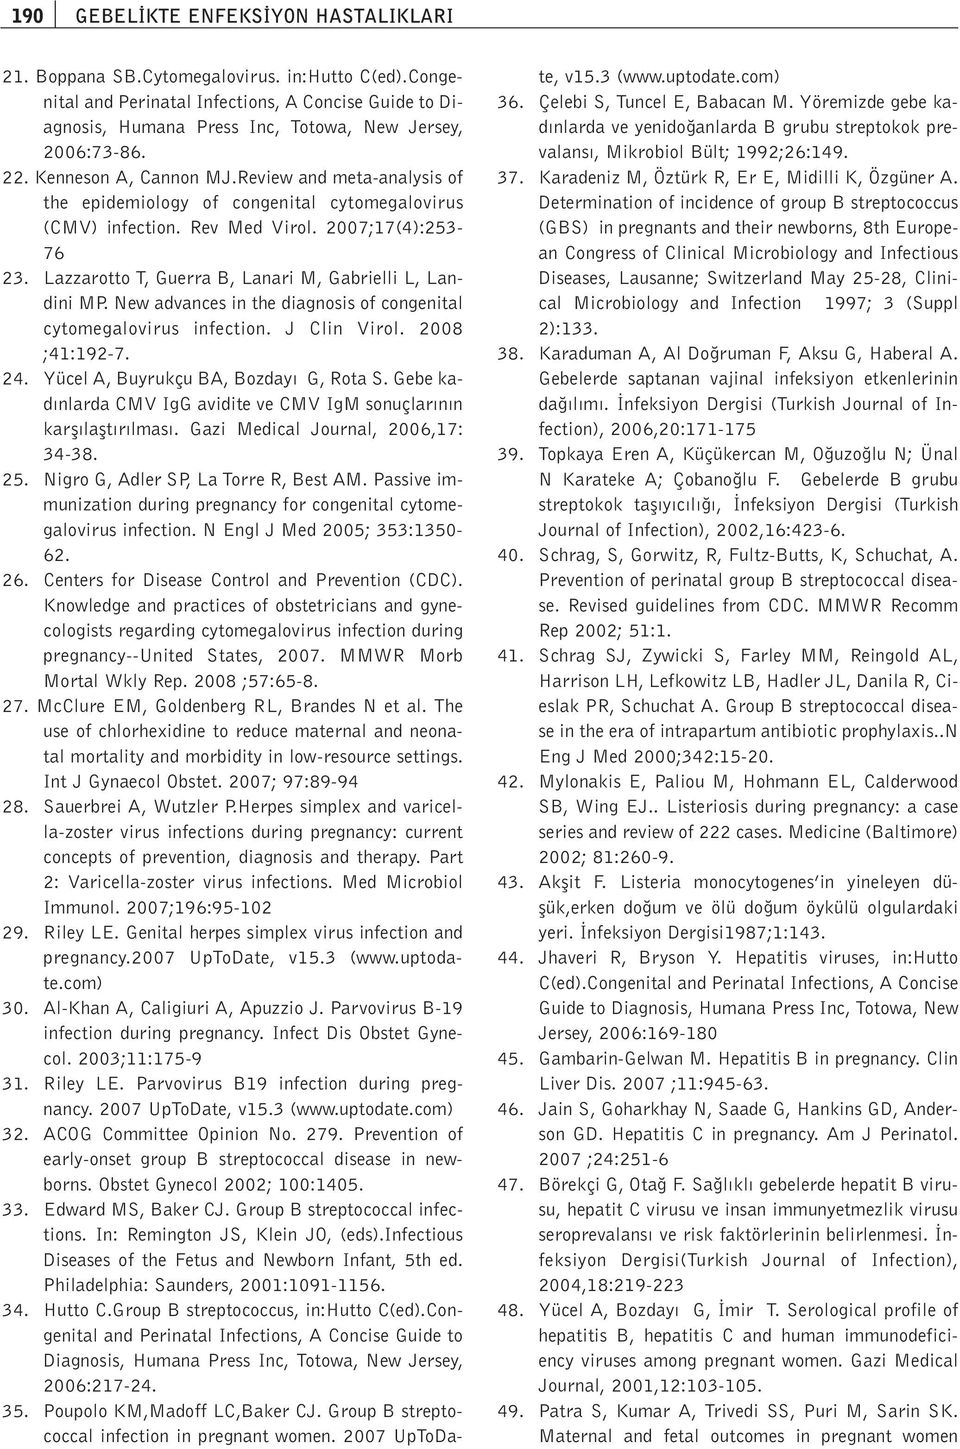 Review and meta-analysis of the epidemiology of congenital cytomegalovirus (CMV) infection. Rev Med Virol. 2007;17(4):253-76 23. Lazzarotto T, Guerra B, Lanari M, Gabrielli L, Landini MP.